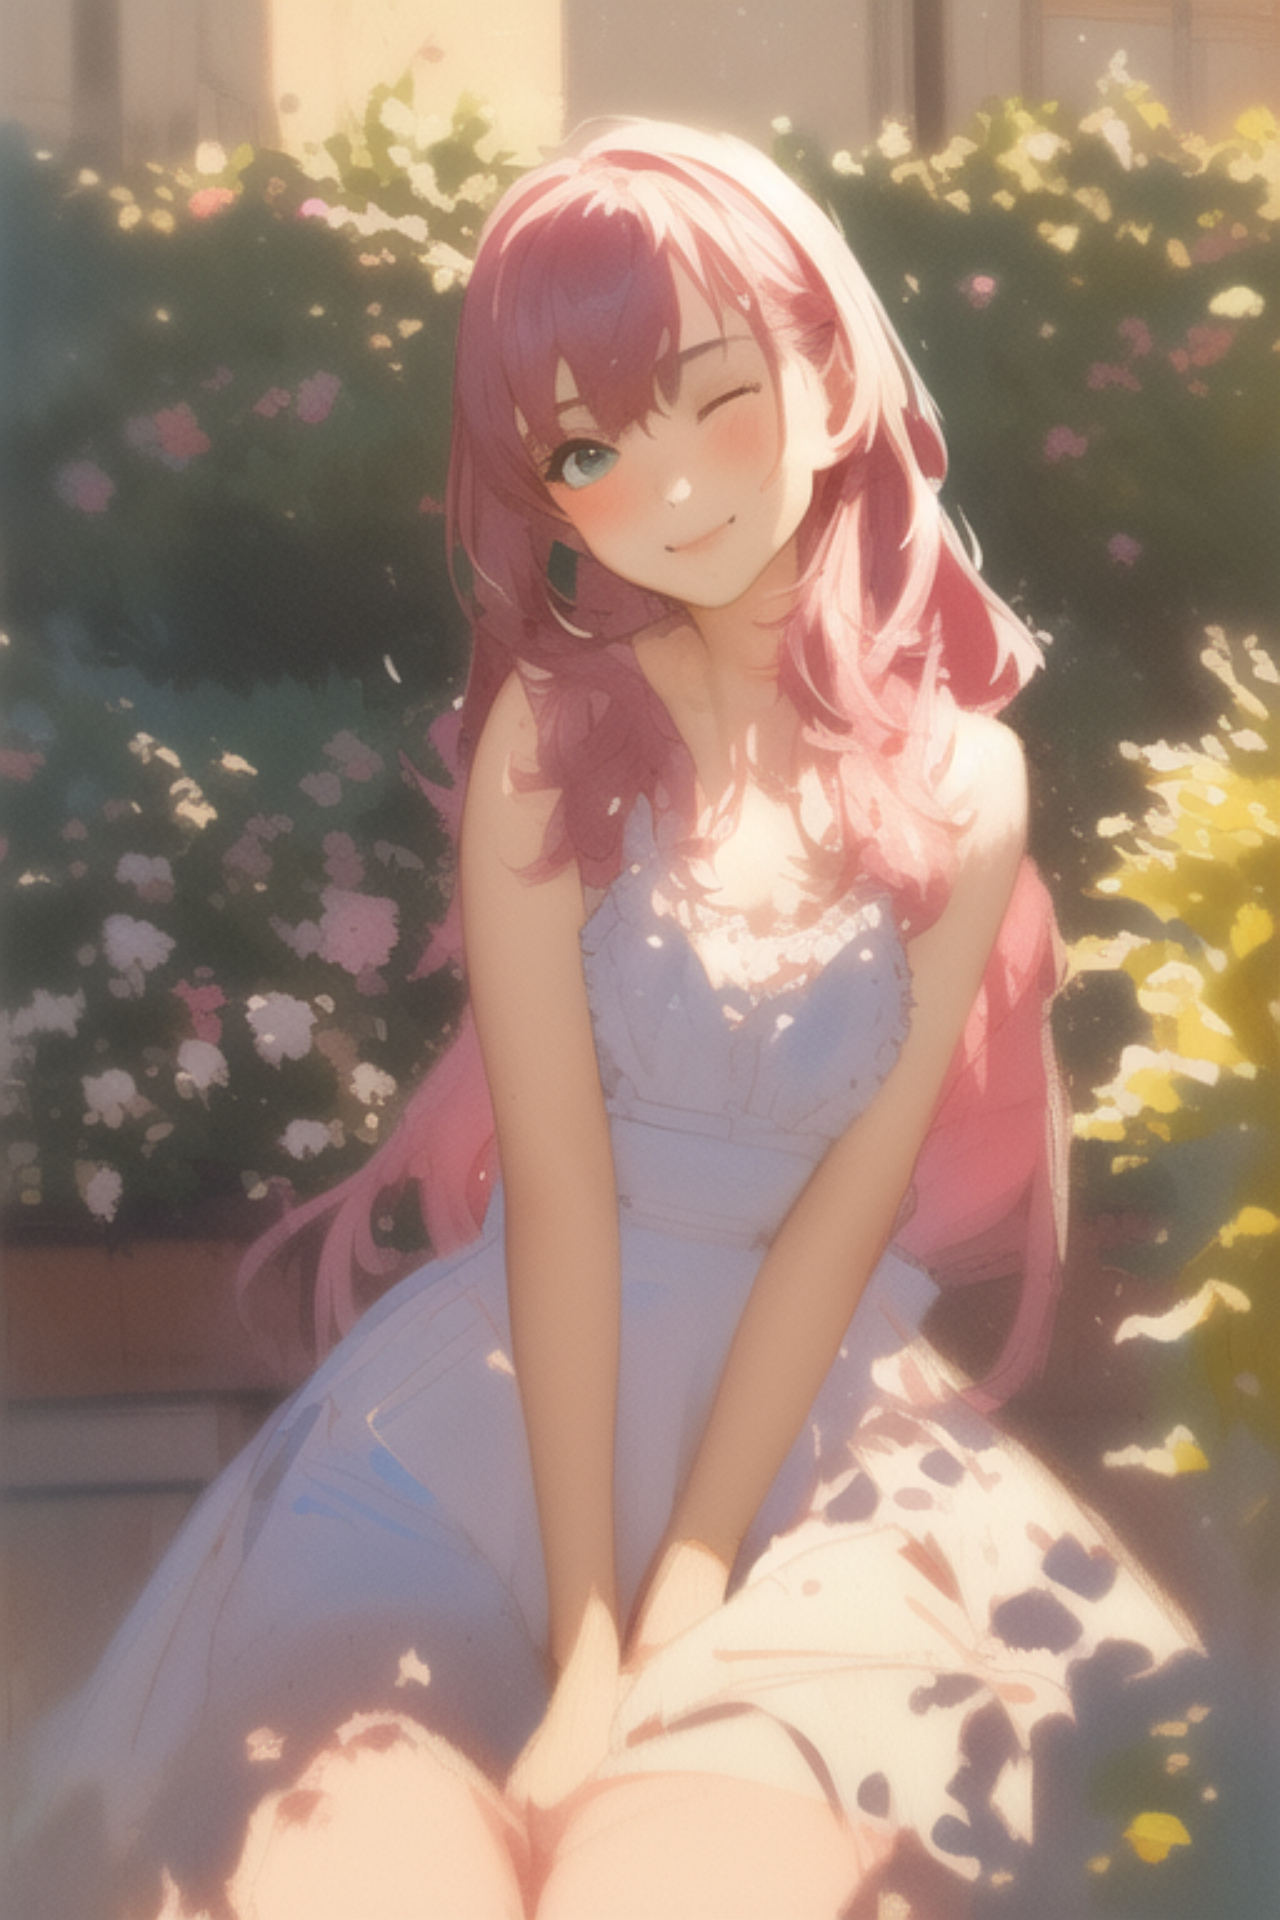 Anime 1280x1920 pink hair wink white dress smiling impressionism Sunny novel ai portrait display one eye closed flowers AI art